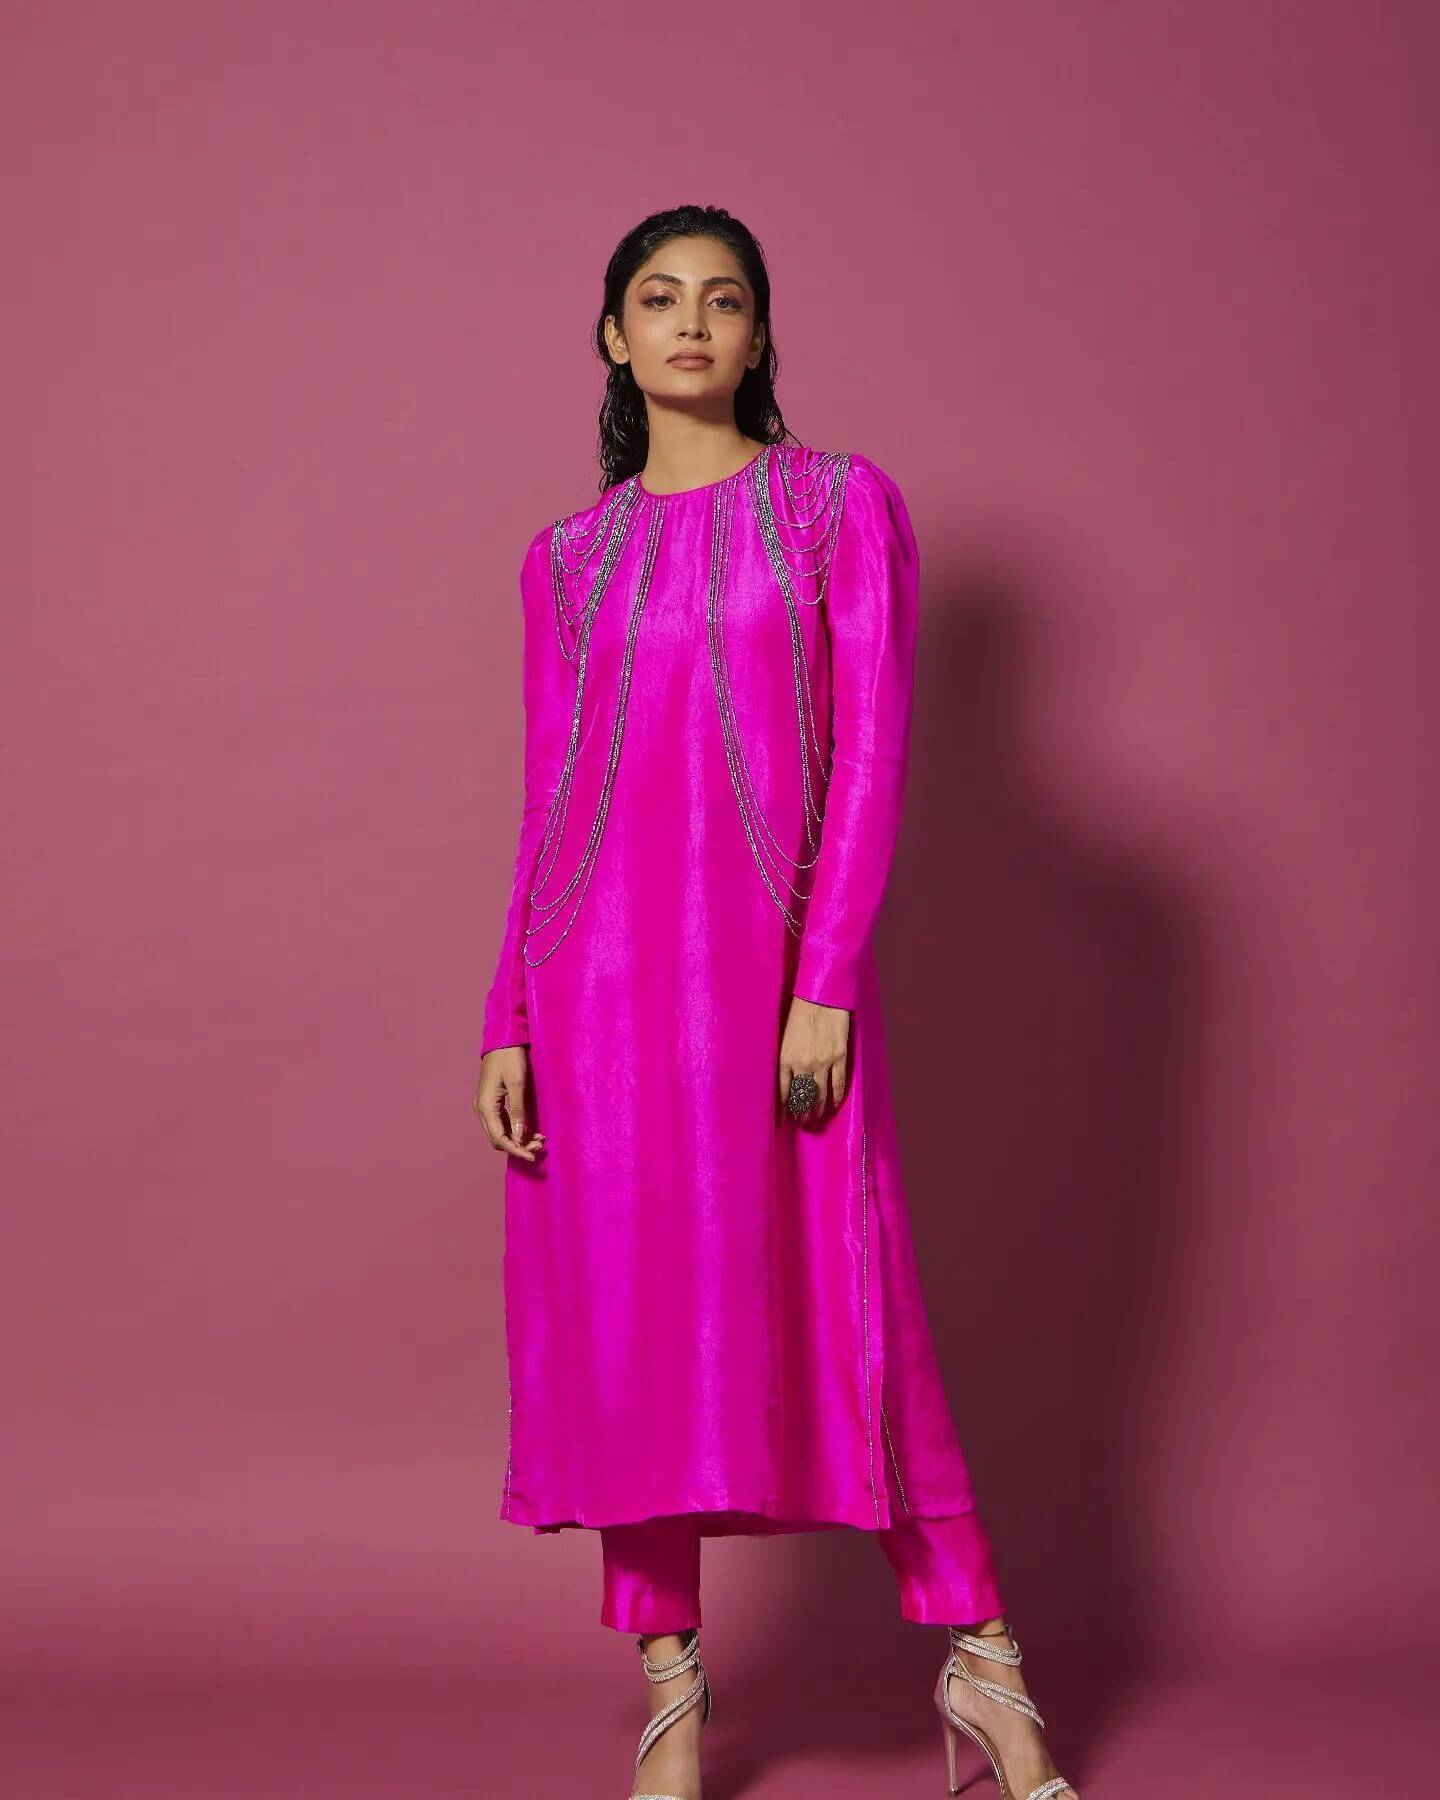 Gorgeous Swathi Muppala In Magenta Pink Embellished Ensemble With Sleek Hairstyle